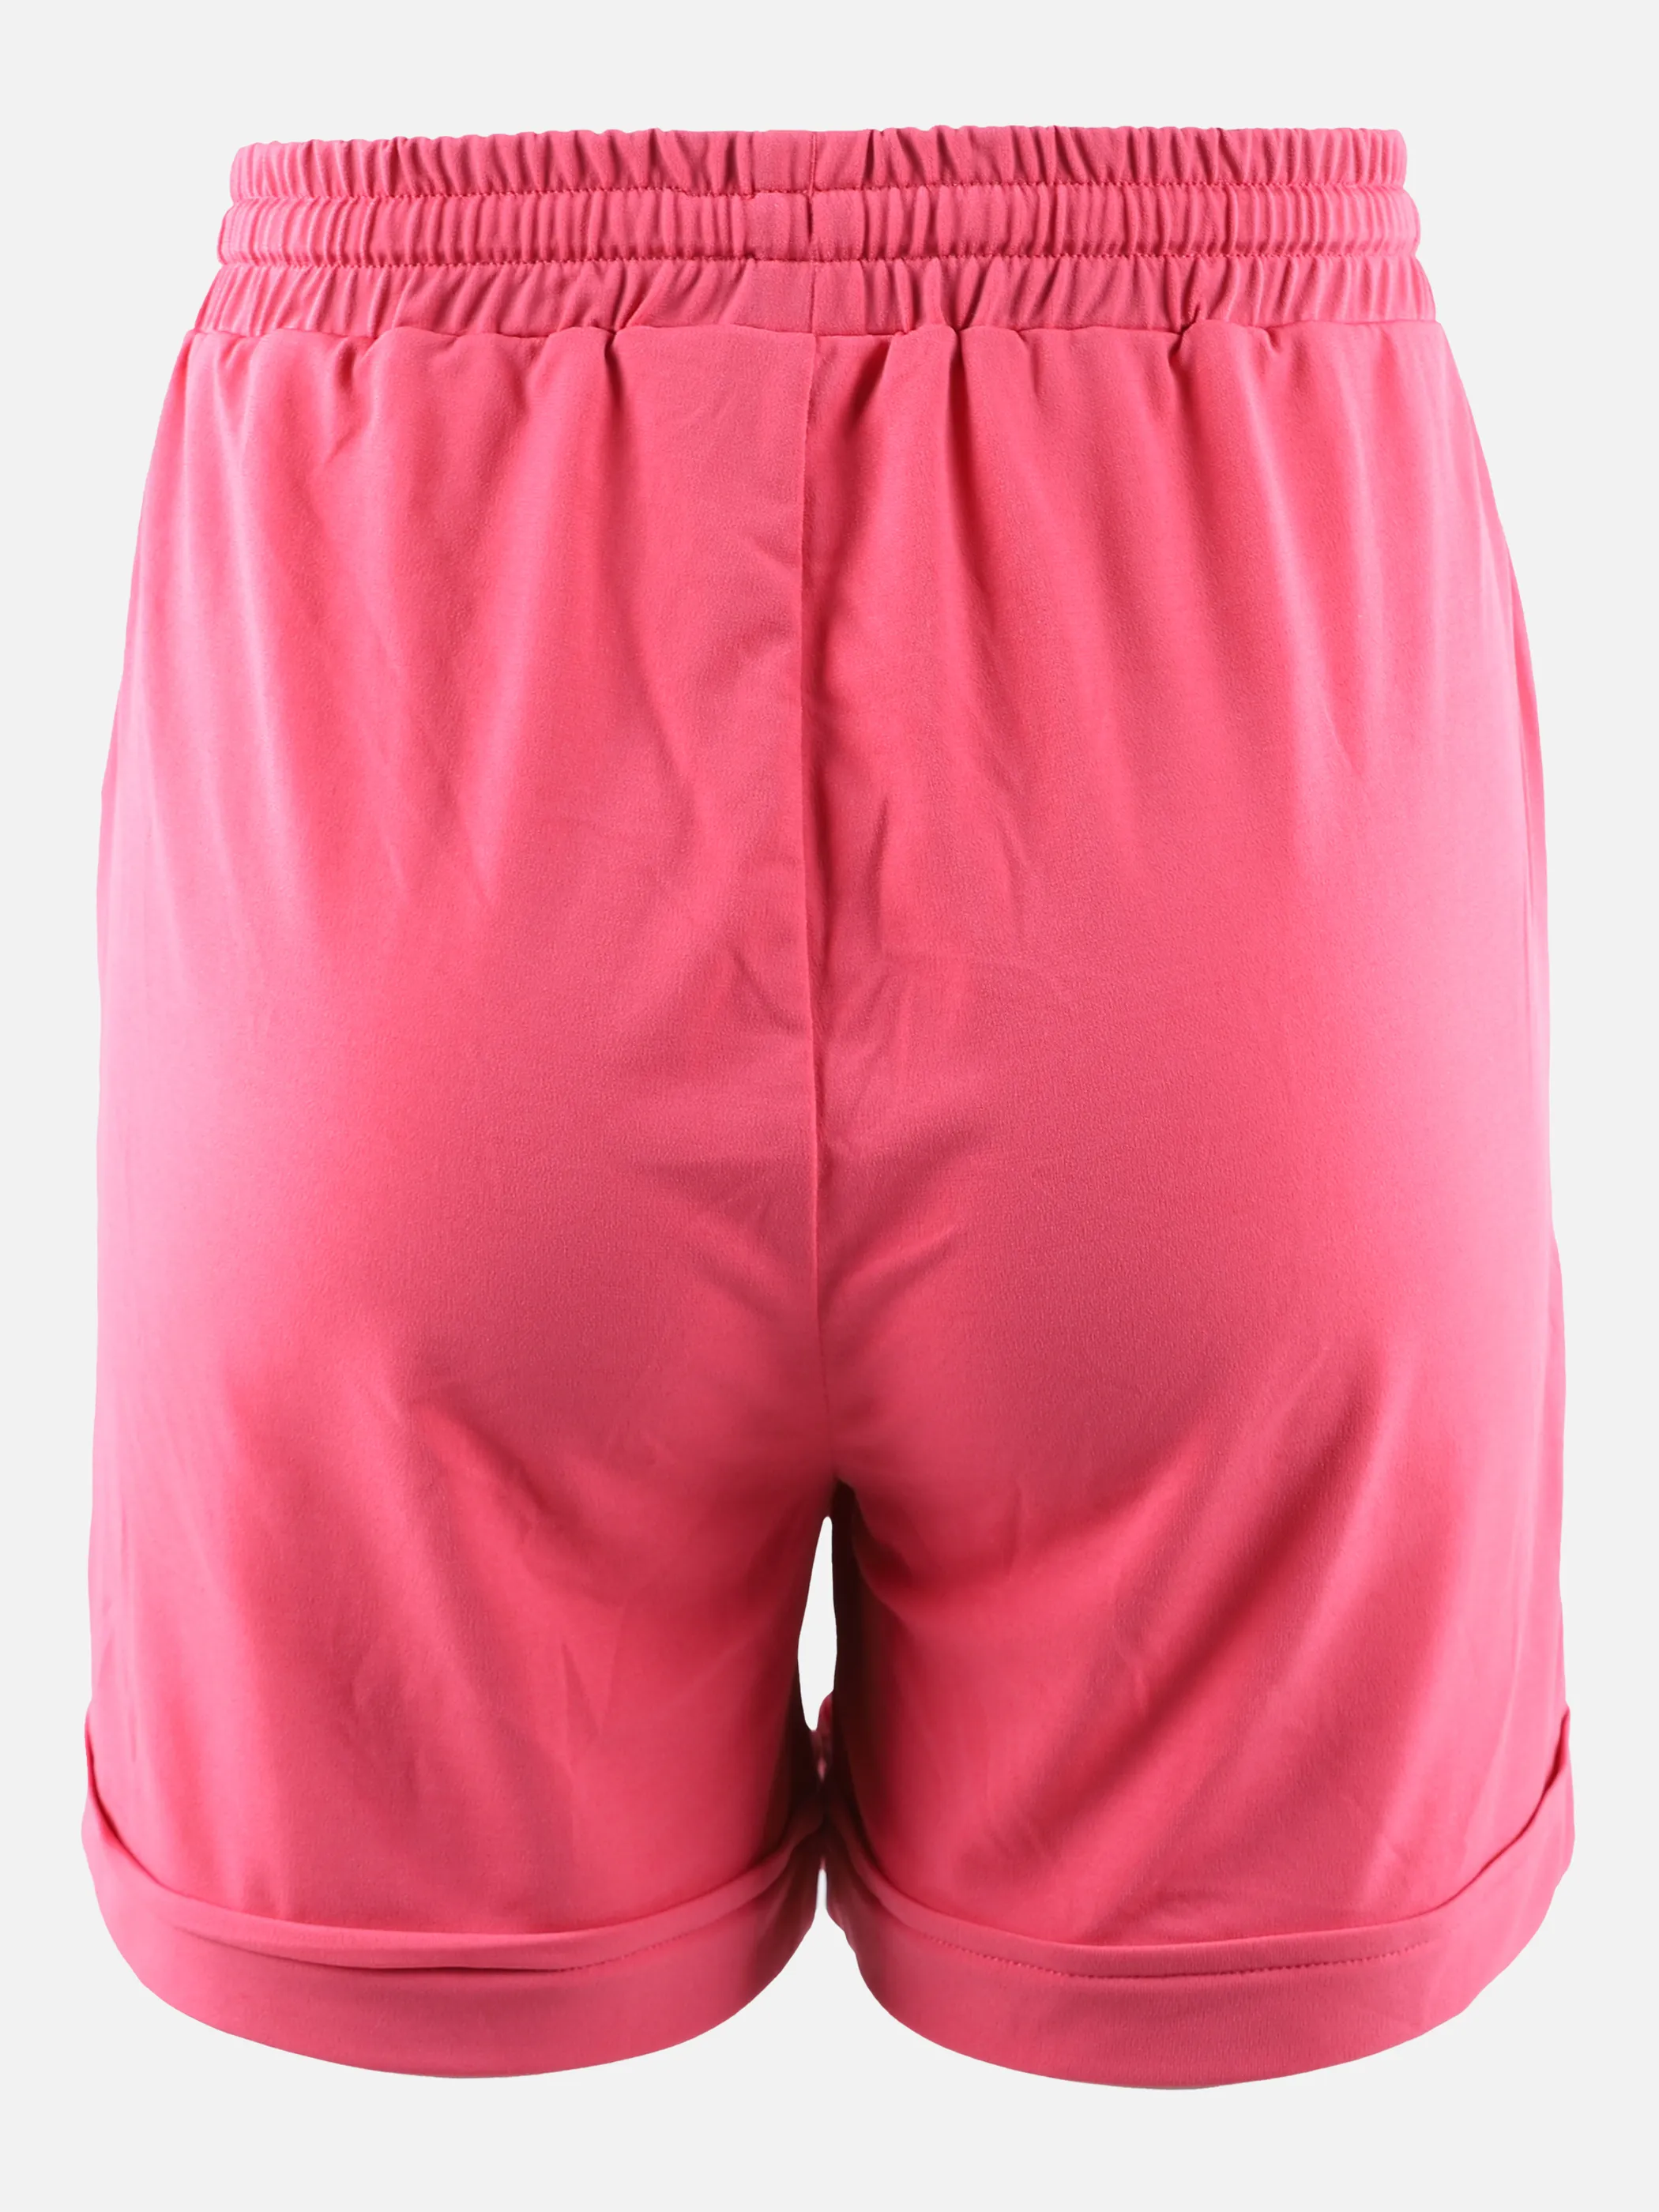 Stop + Go JM Flatter Shorts in pink/schwarz/blau,schwarz AOP Pink 881691 PINK 2